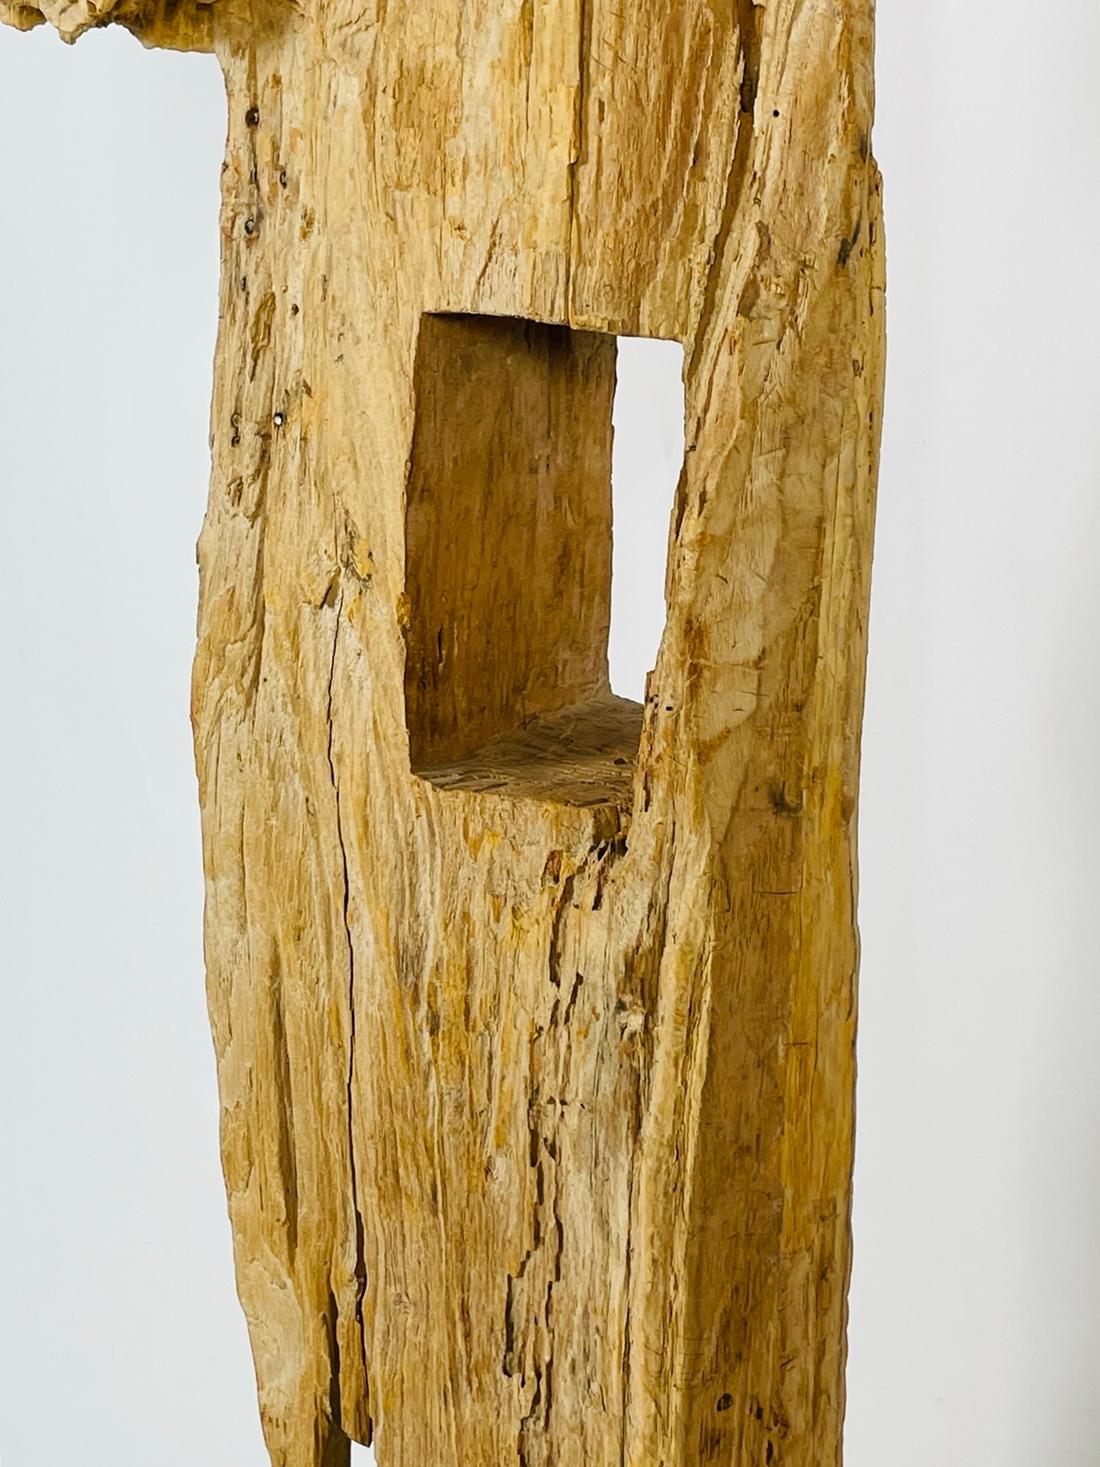 Steel Carved Wood Sculpture on a Metal Base For Sale